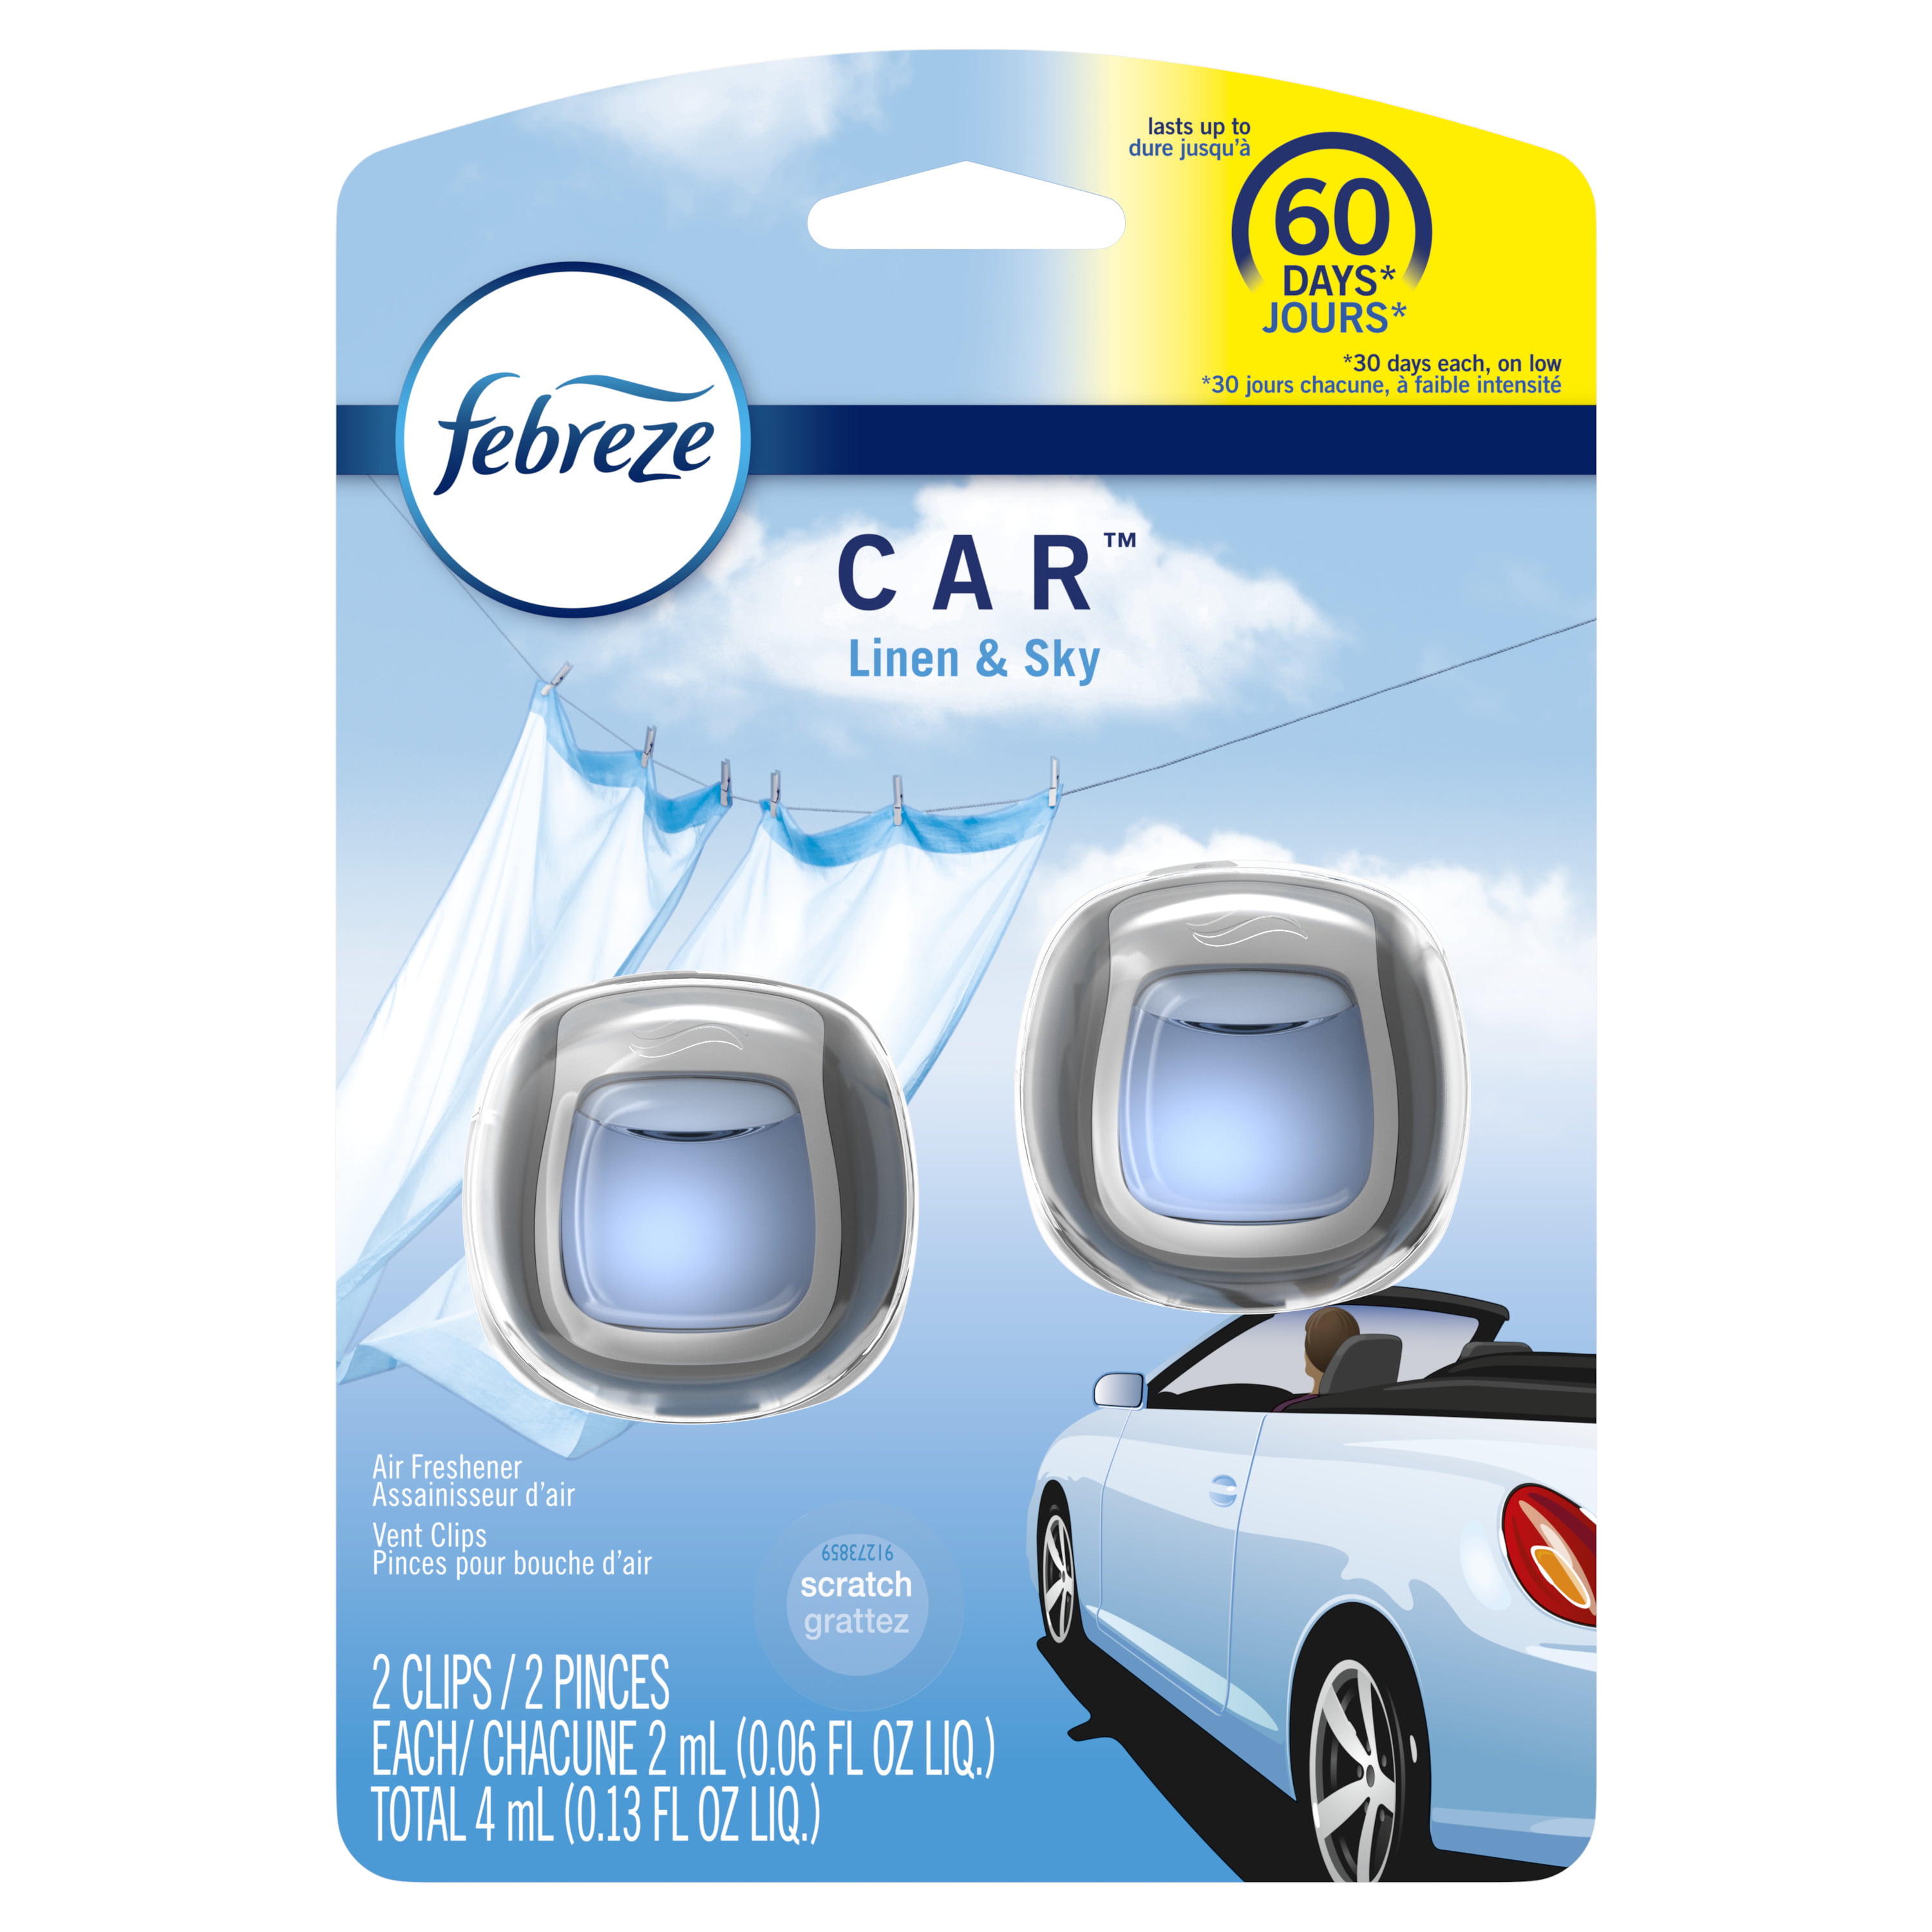 Best Car Air Freshener